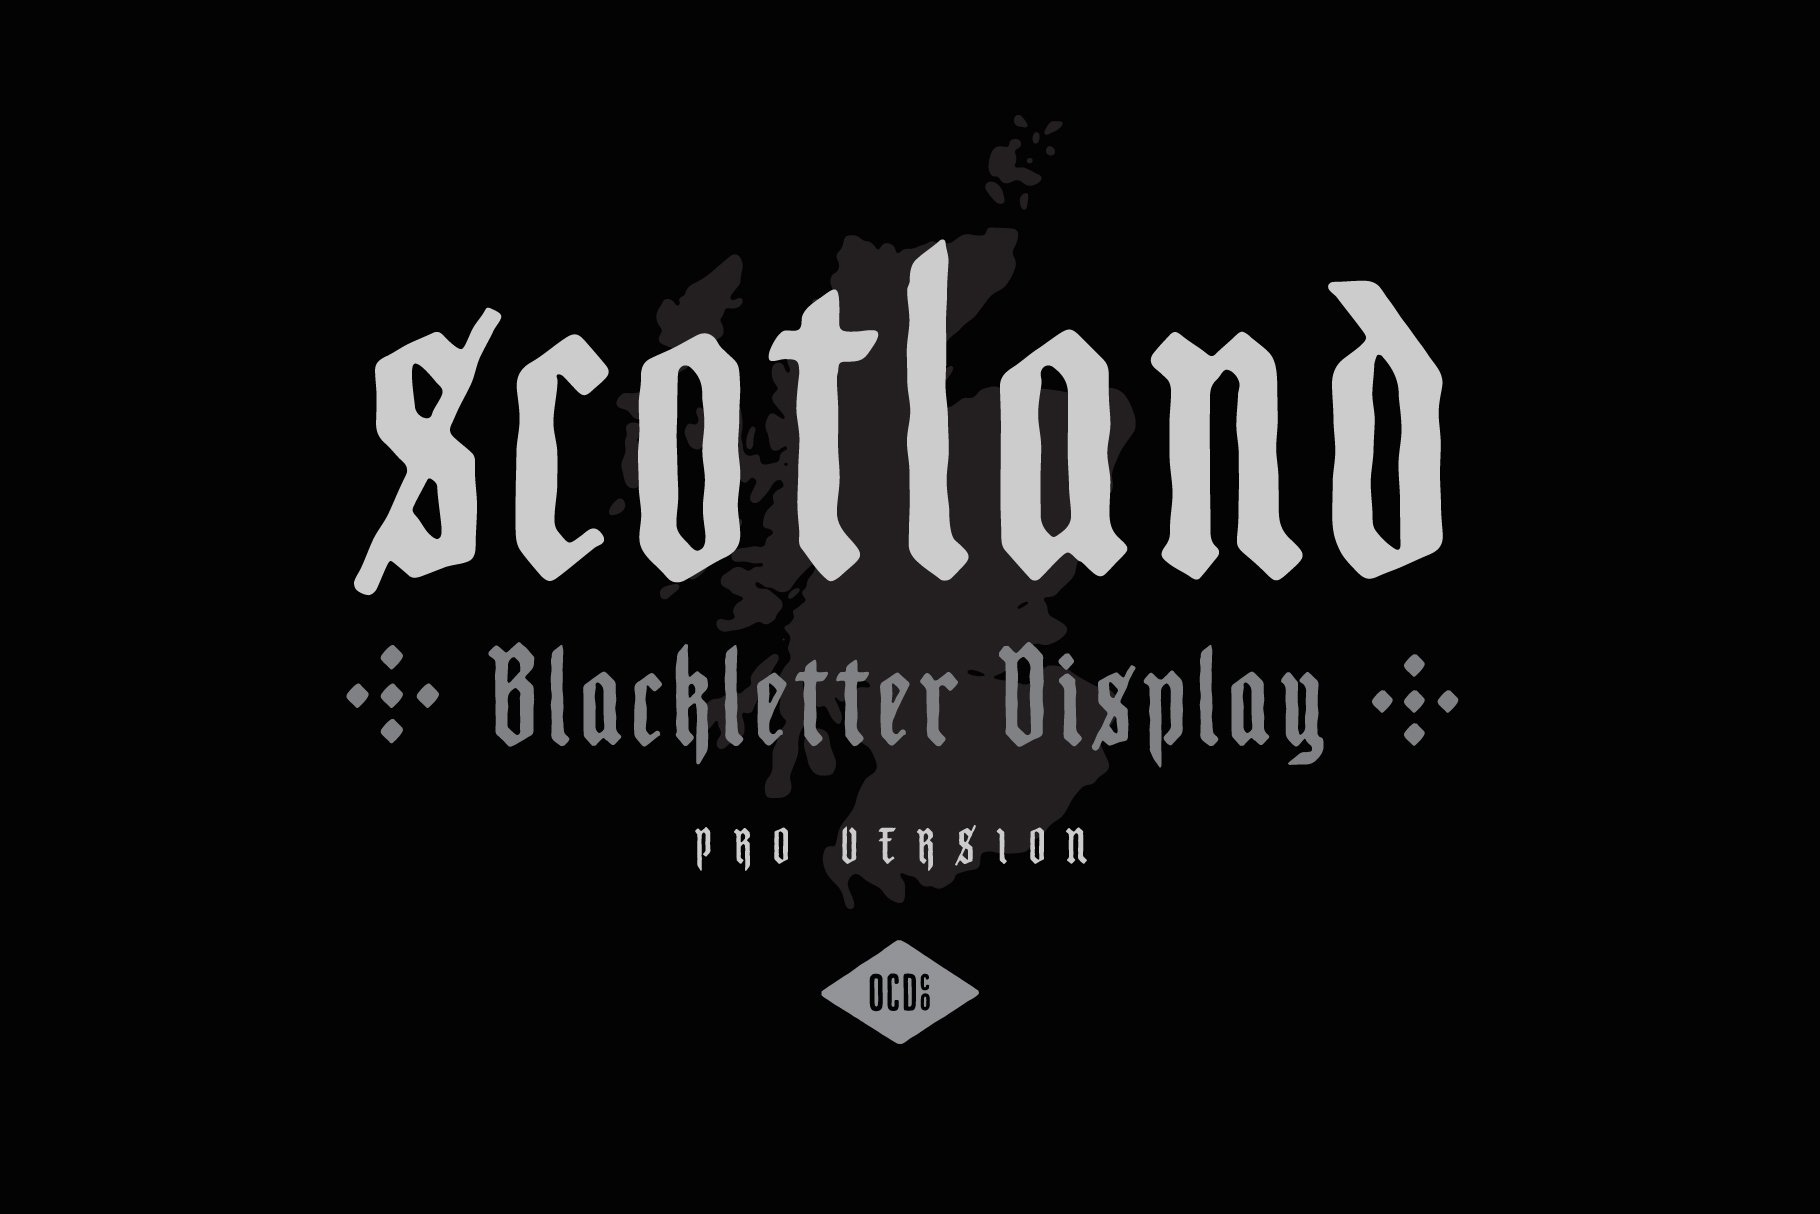 Scotland - Blackletter Display cover image.